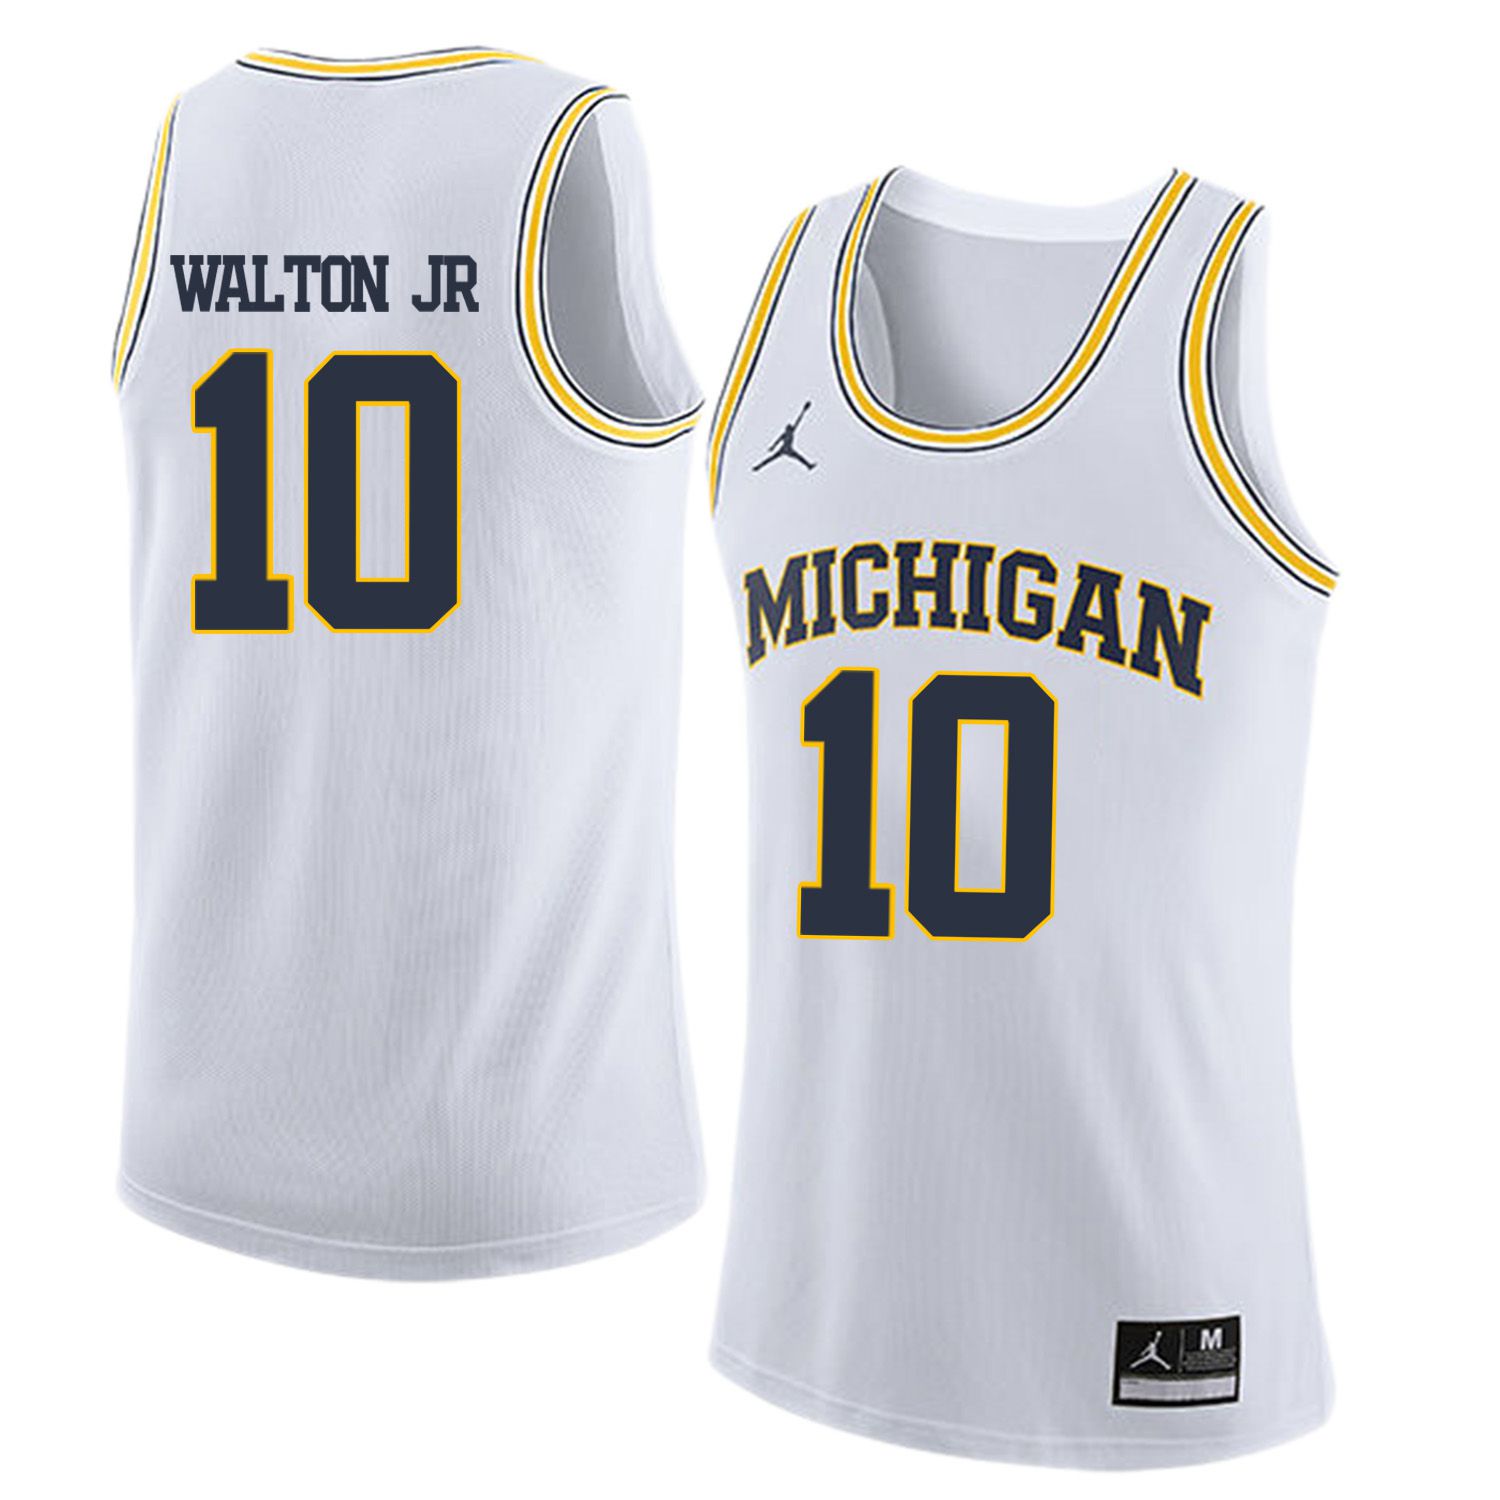 Men Jordan University of Michigan Basketball White 10 walton jr Customized NCAA Jerseys